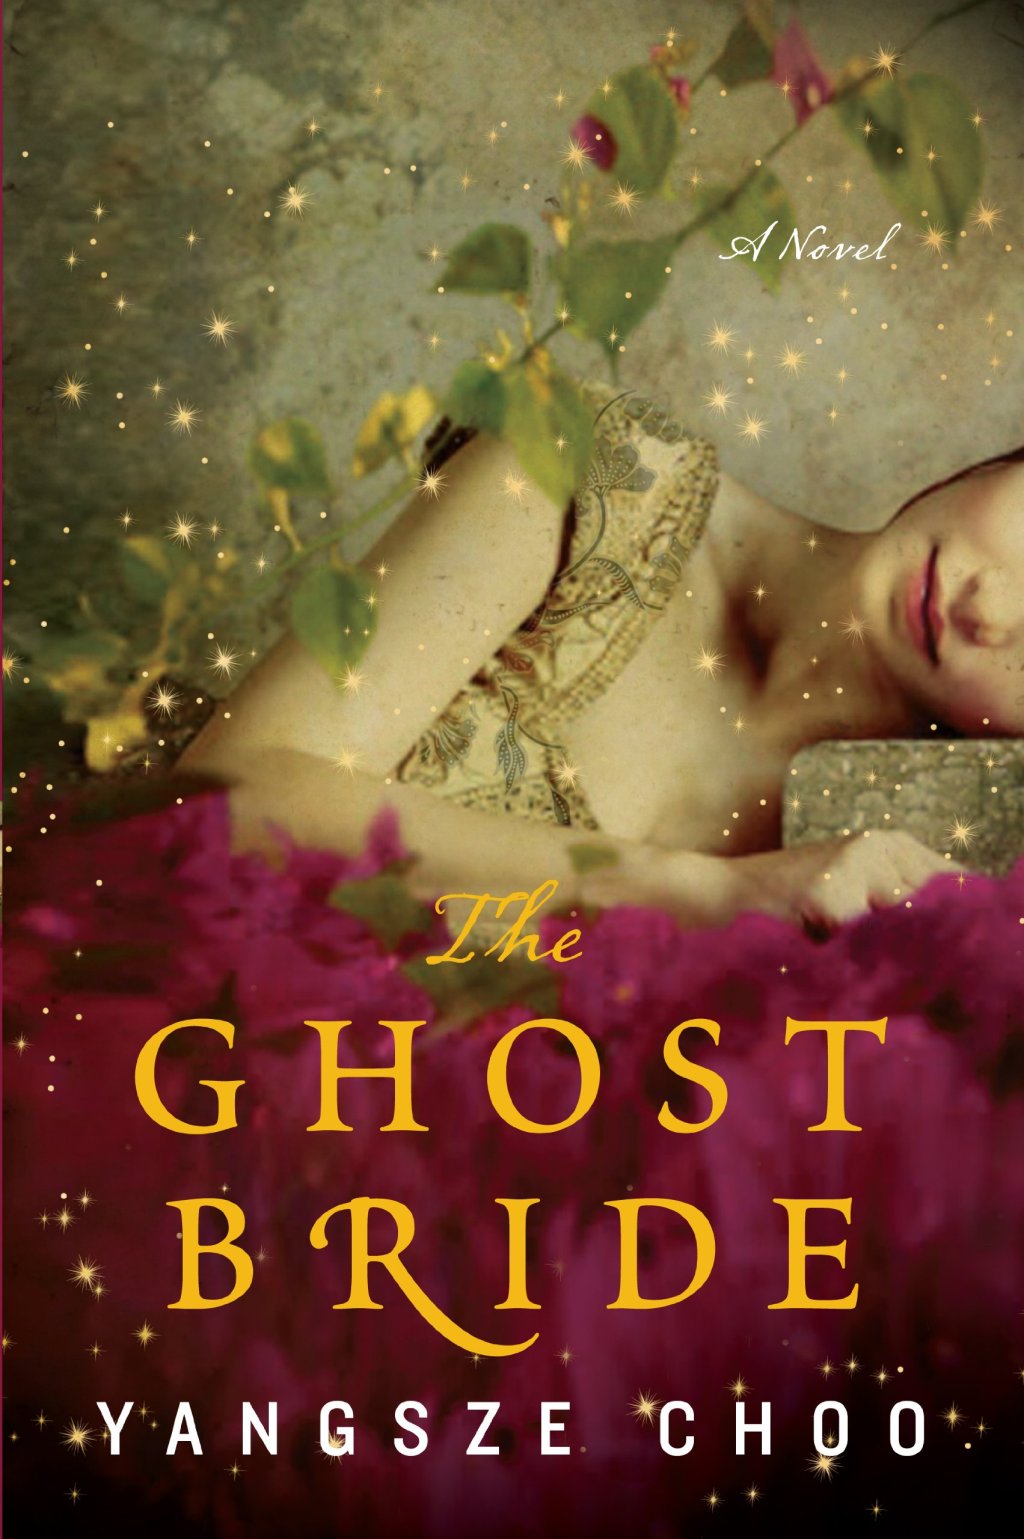 The Ghost Bride by Yangsze Choo